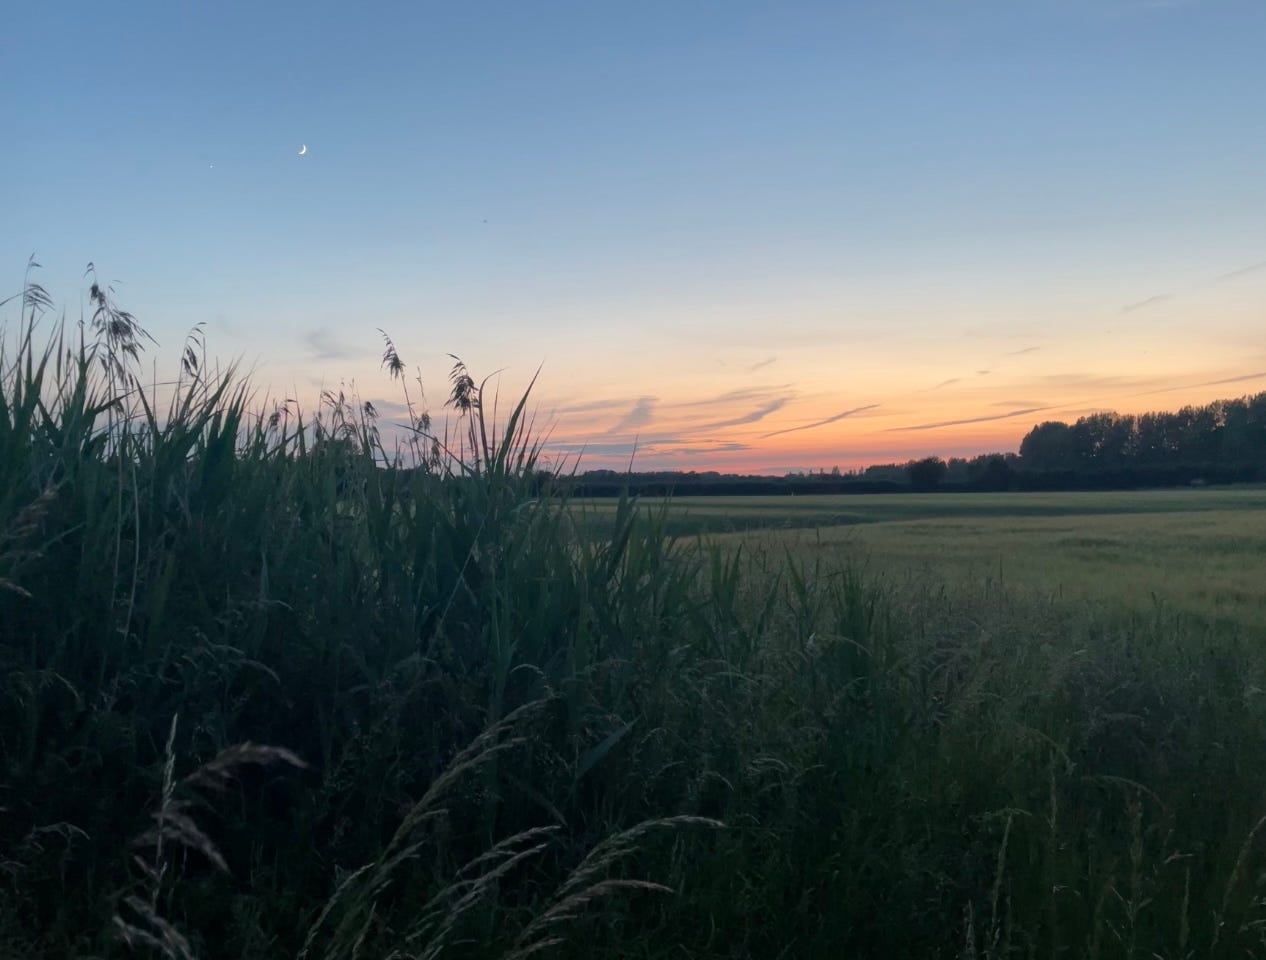 sunset over reeds